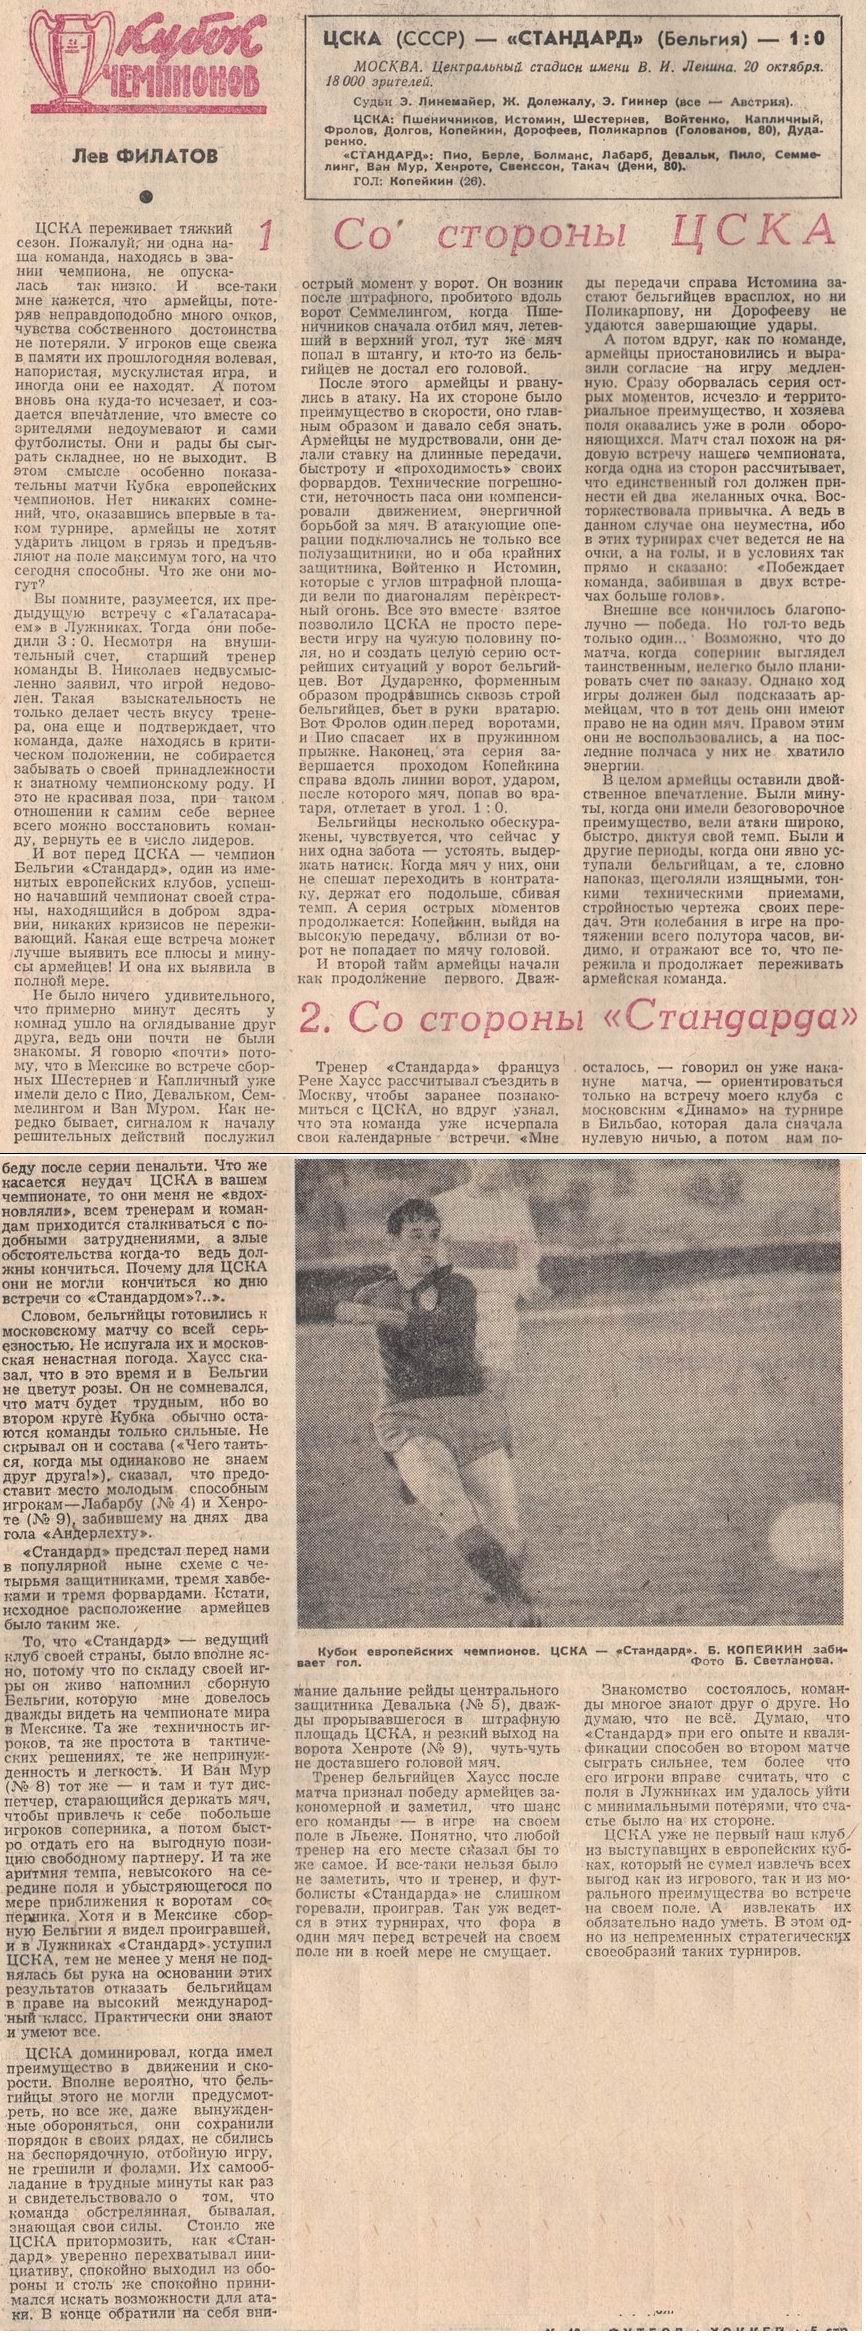 1971-10-20.CSKA-Standard.jpg